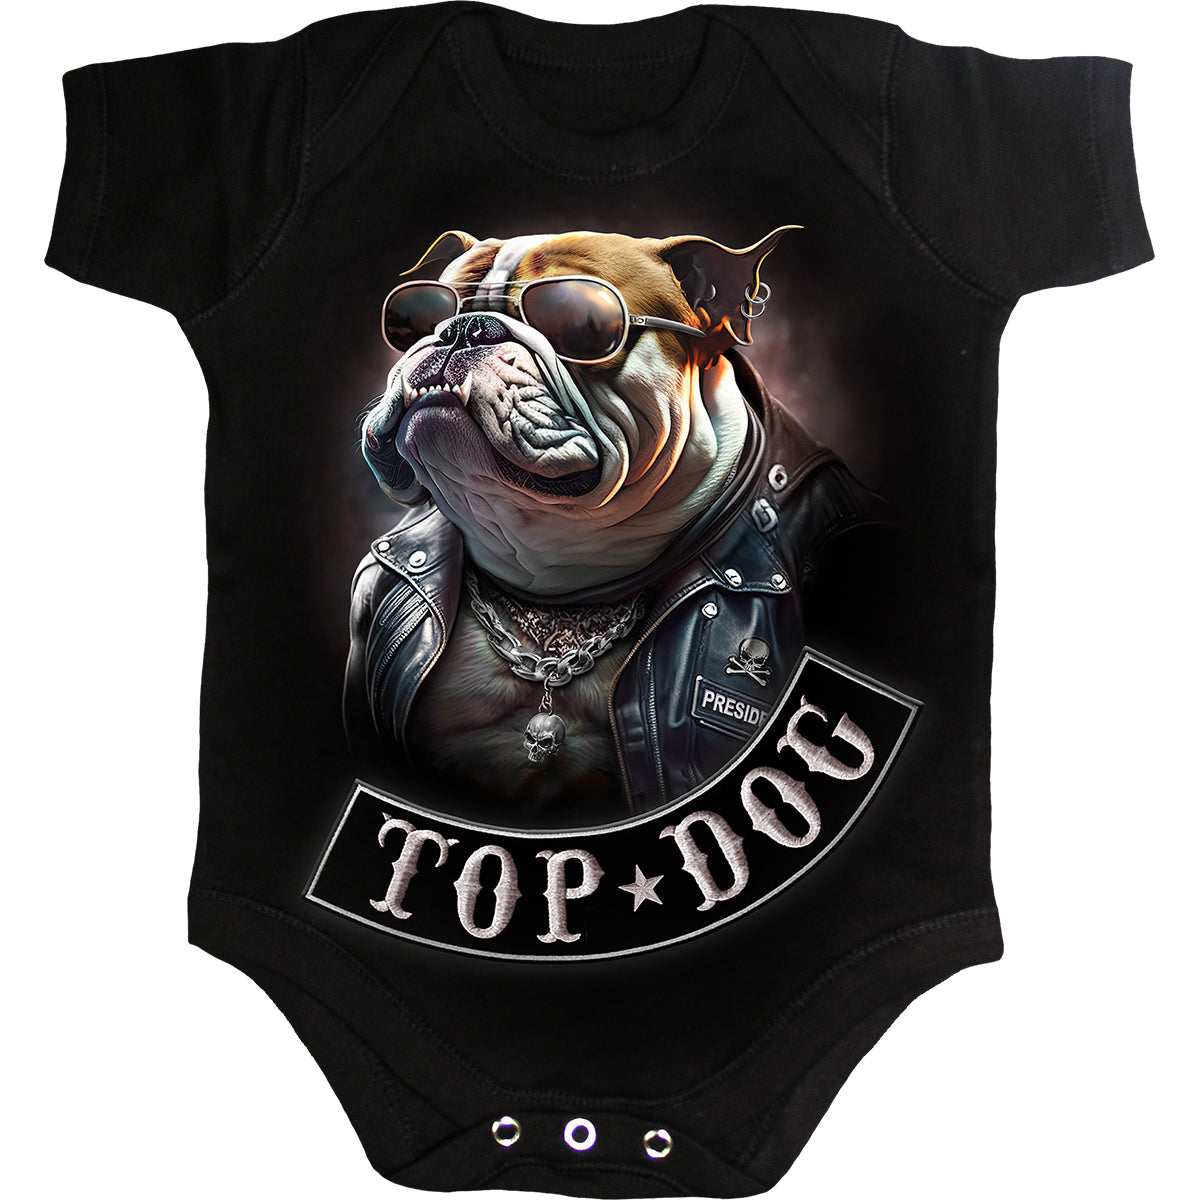 TOP DOG - Baby Sleepsuit Black